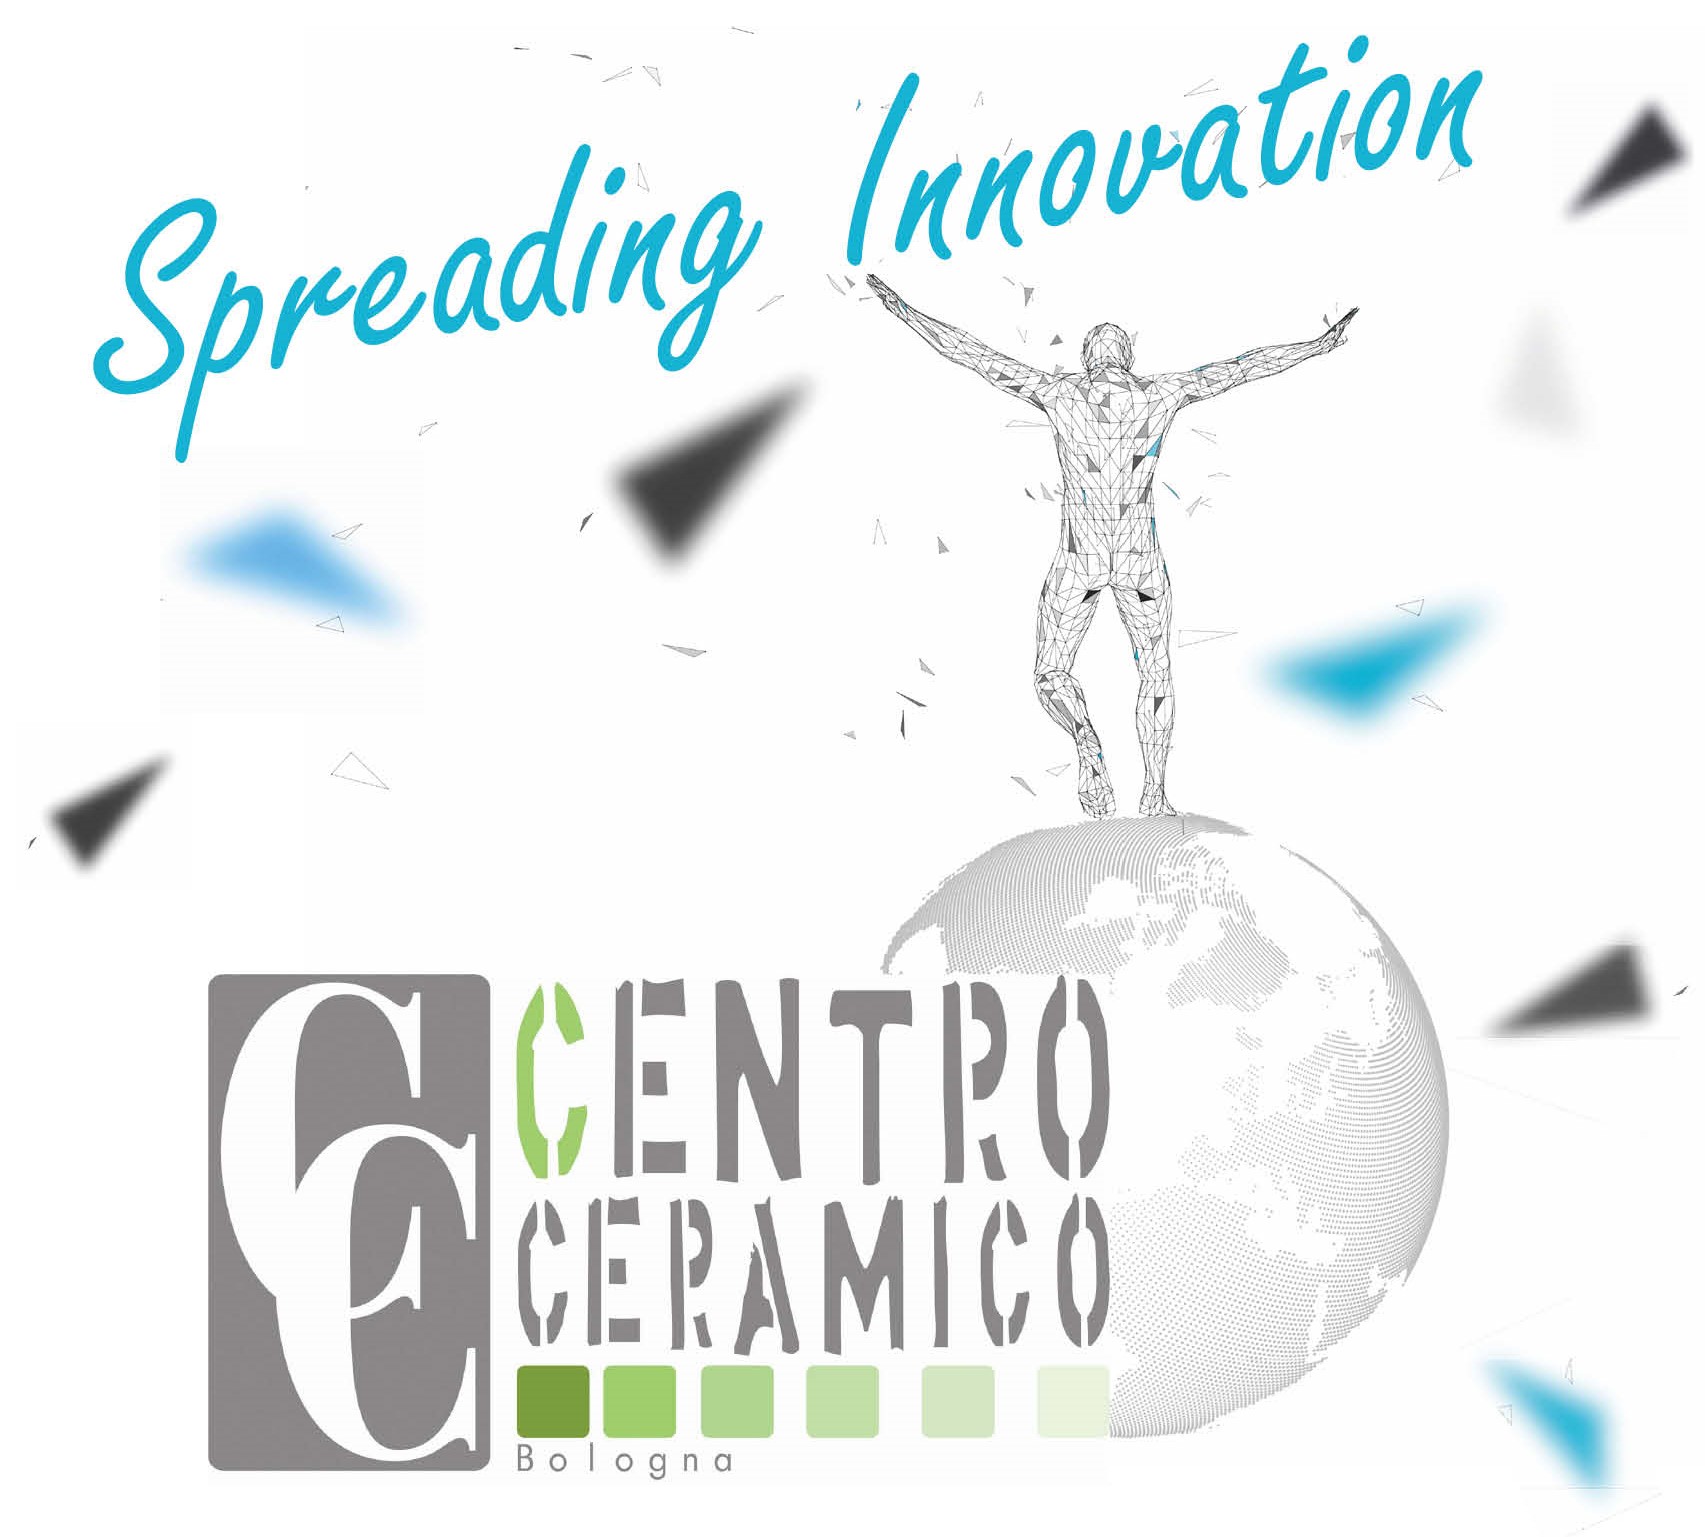 Activity Centro Ceramico, Industry, University, Territory